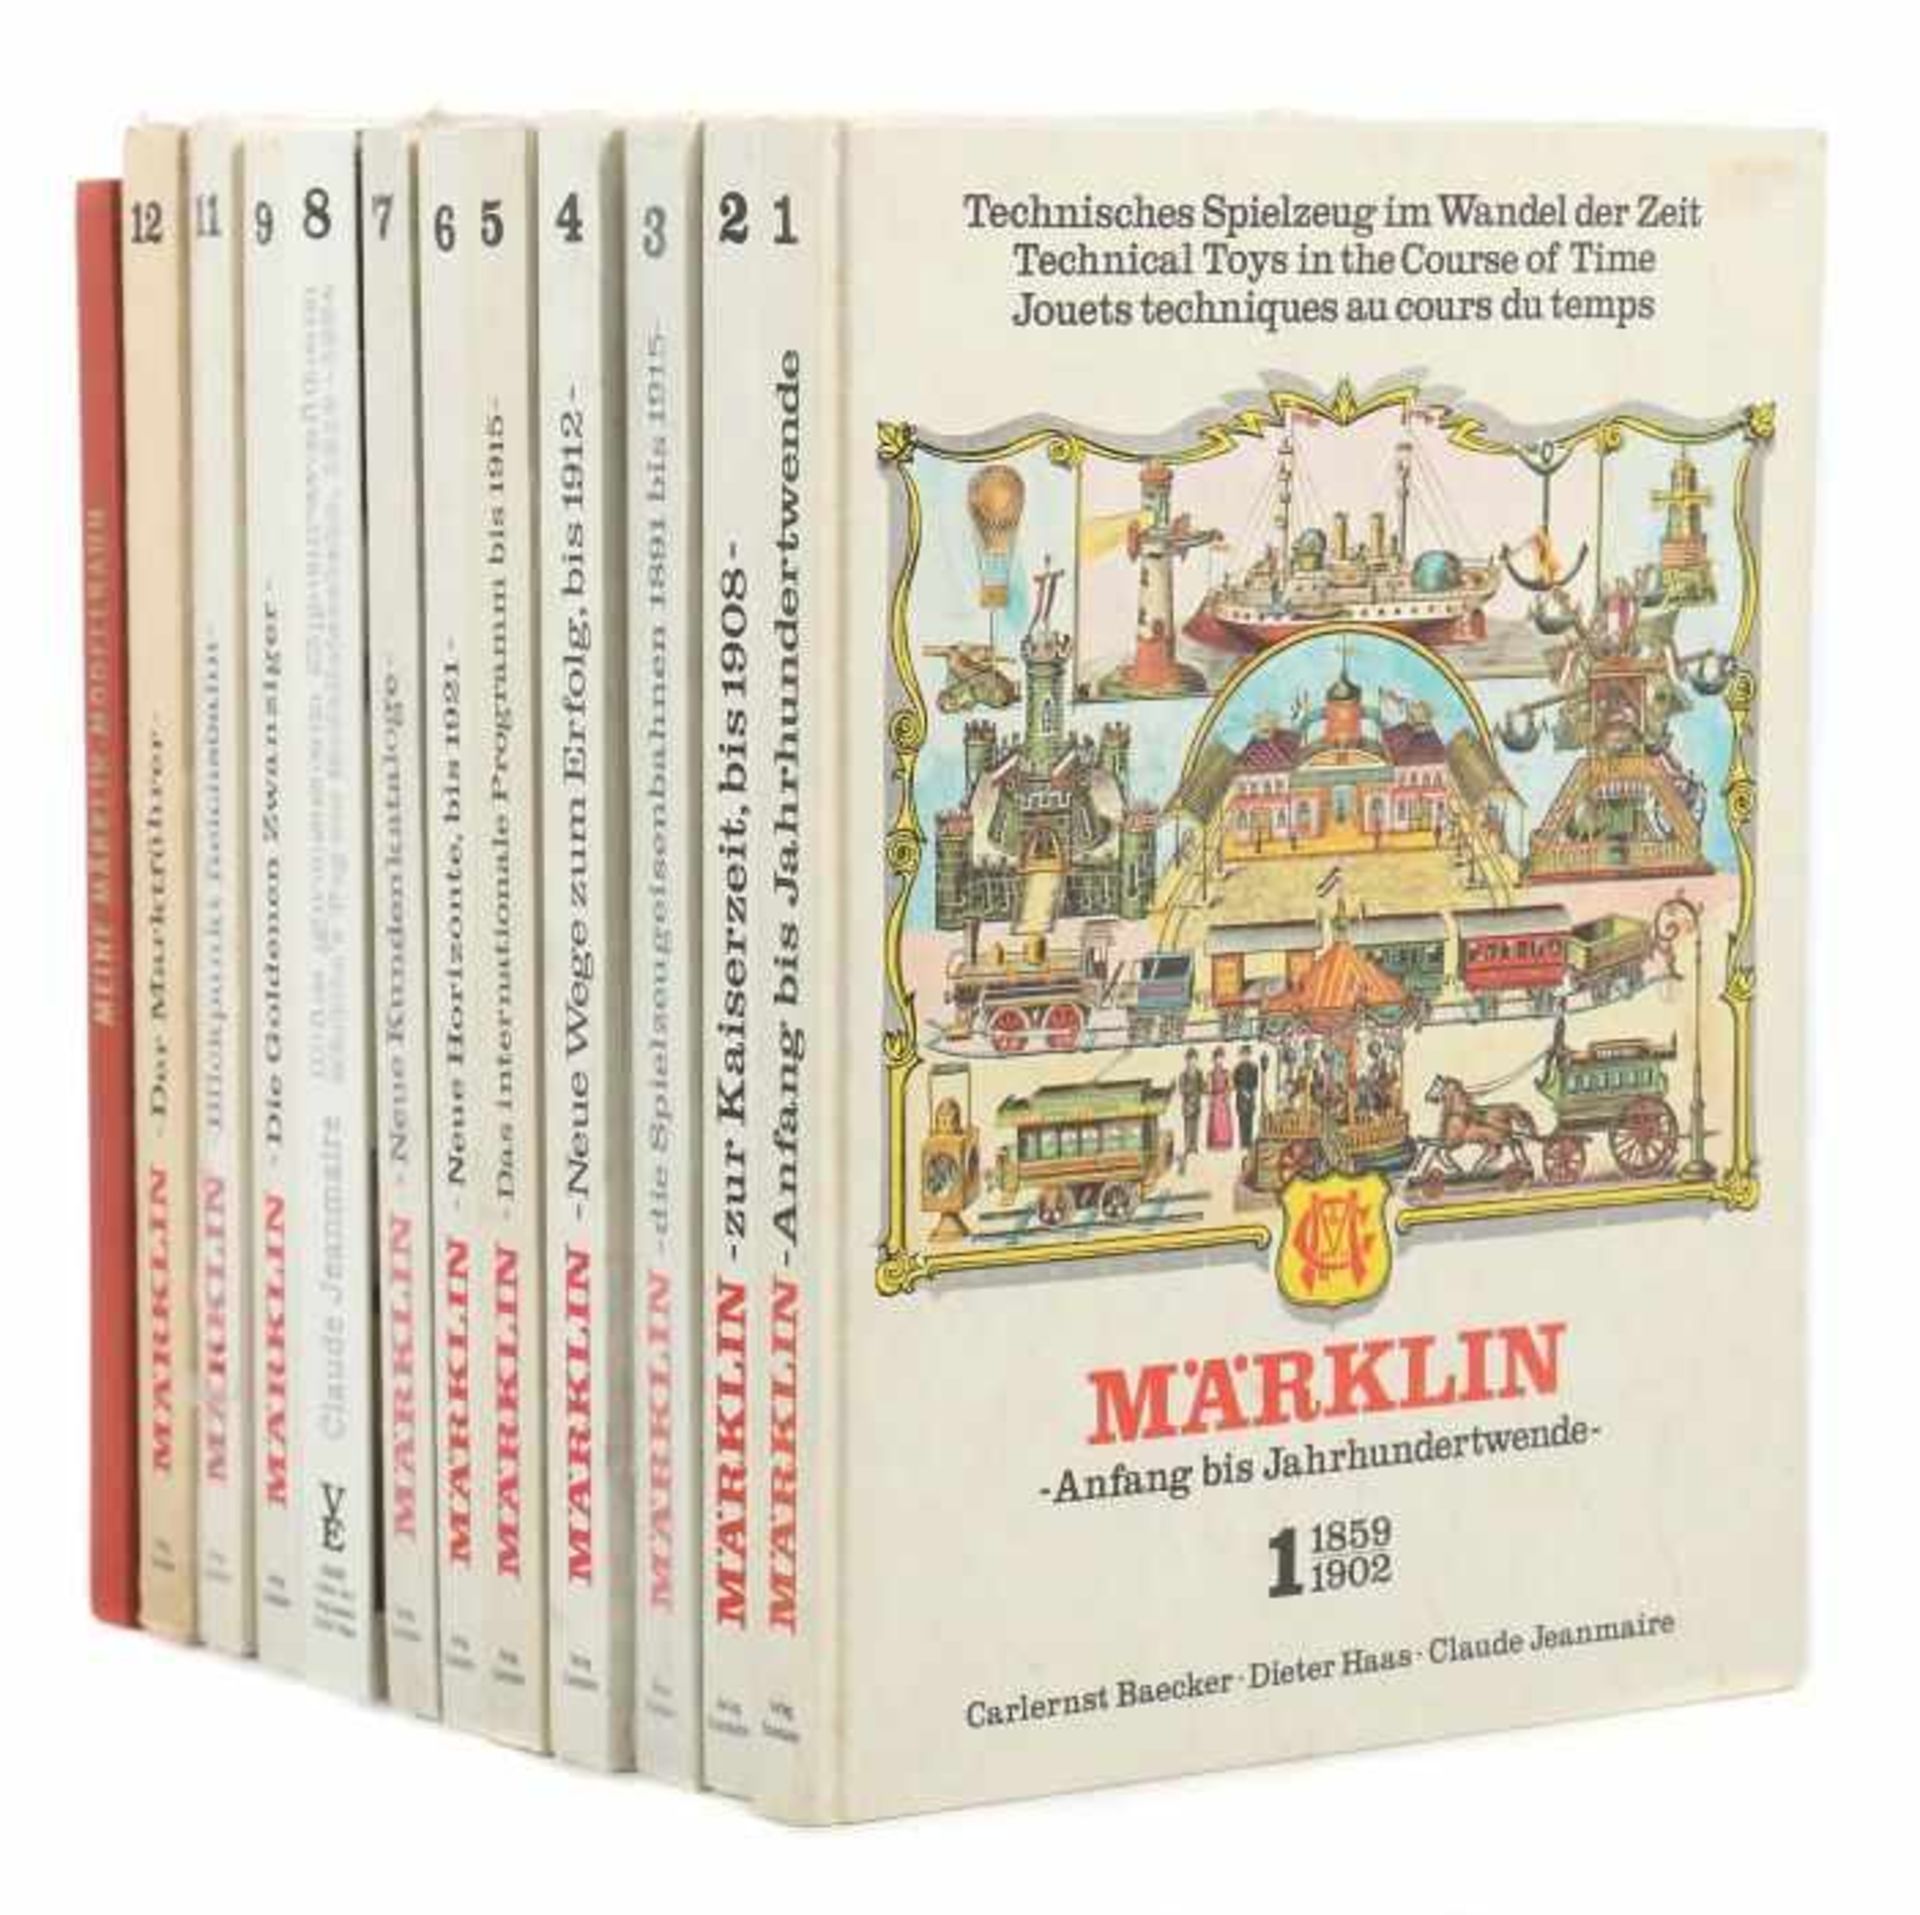 Märklin Reprint-Kataloge gebundenMärklin, ca. 1970er Jahre, Bd. 1-9 und Bd. 11 und 12, Reprint der